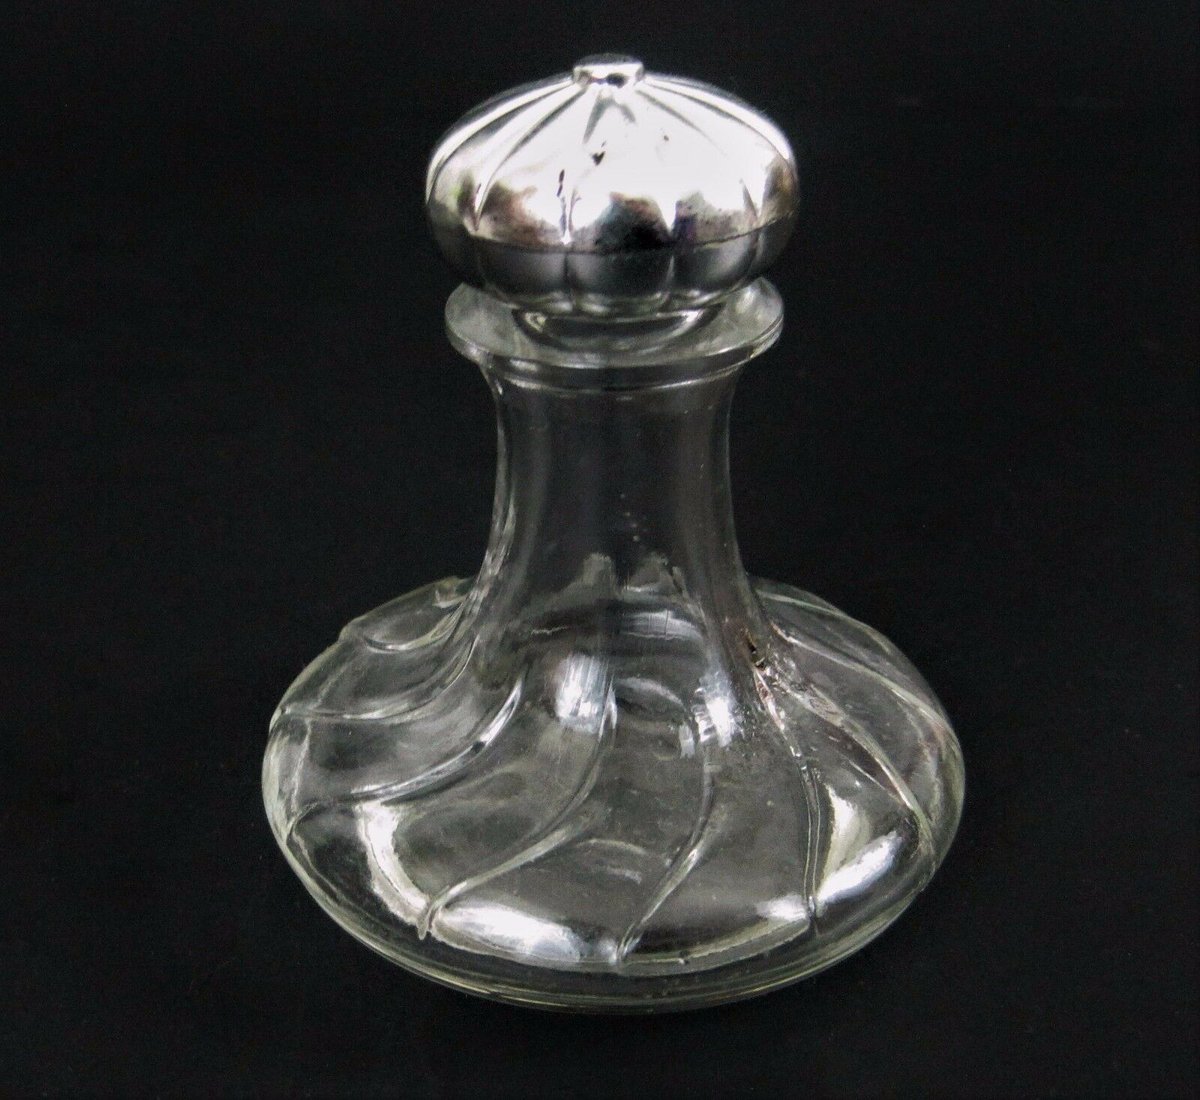 Vtg Squat Perfume Bottle Clear Glass Captains Carafe Bulbous Silver Tone Top #oldbottle #Vanity #VintageVanity ebay.us/pPevWQ via @eBay